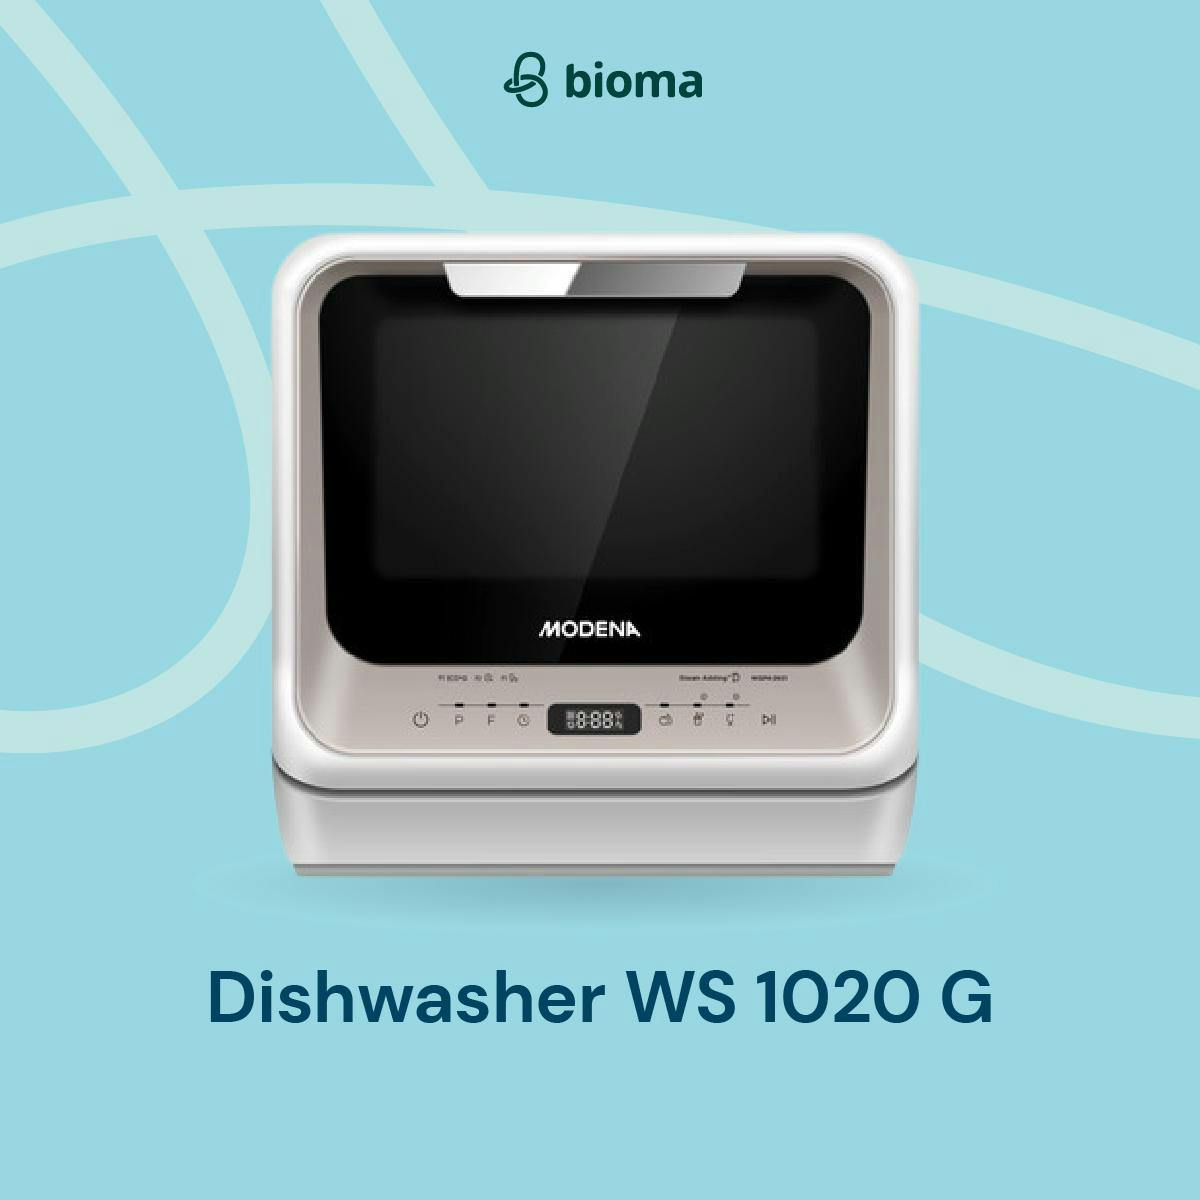 Dishwasher WS 1020 G